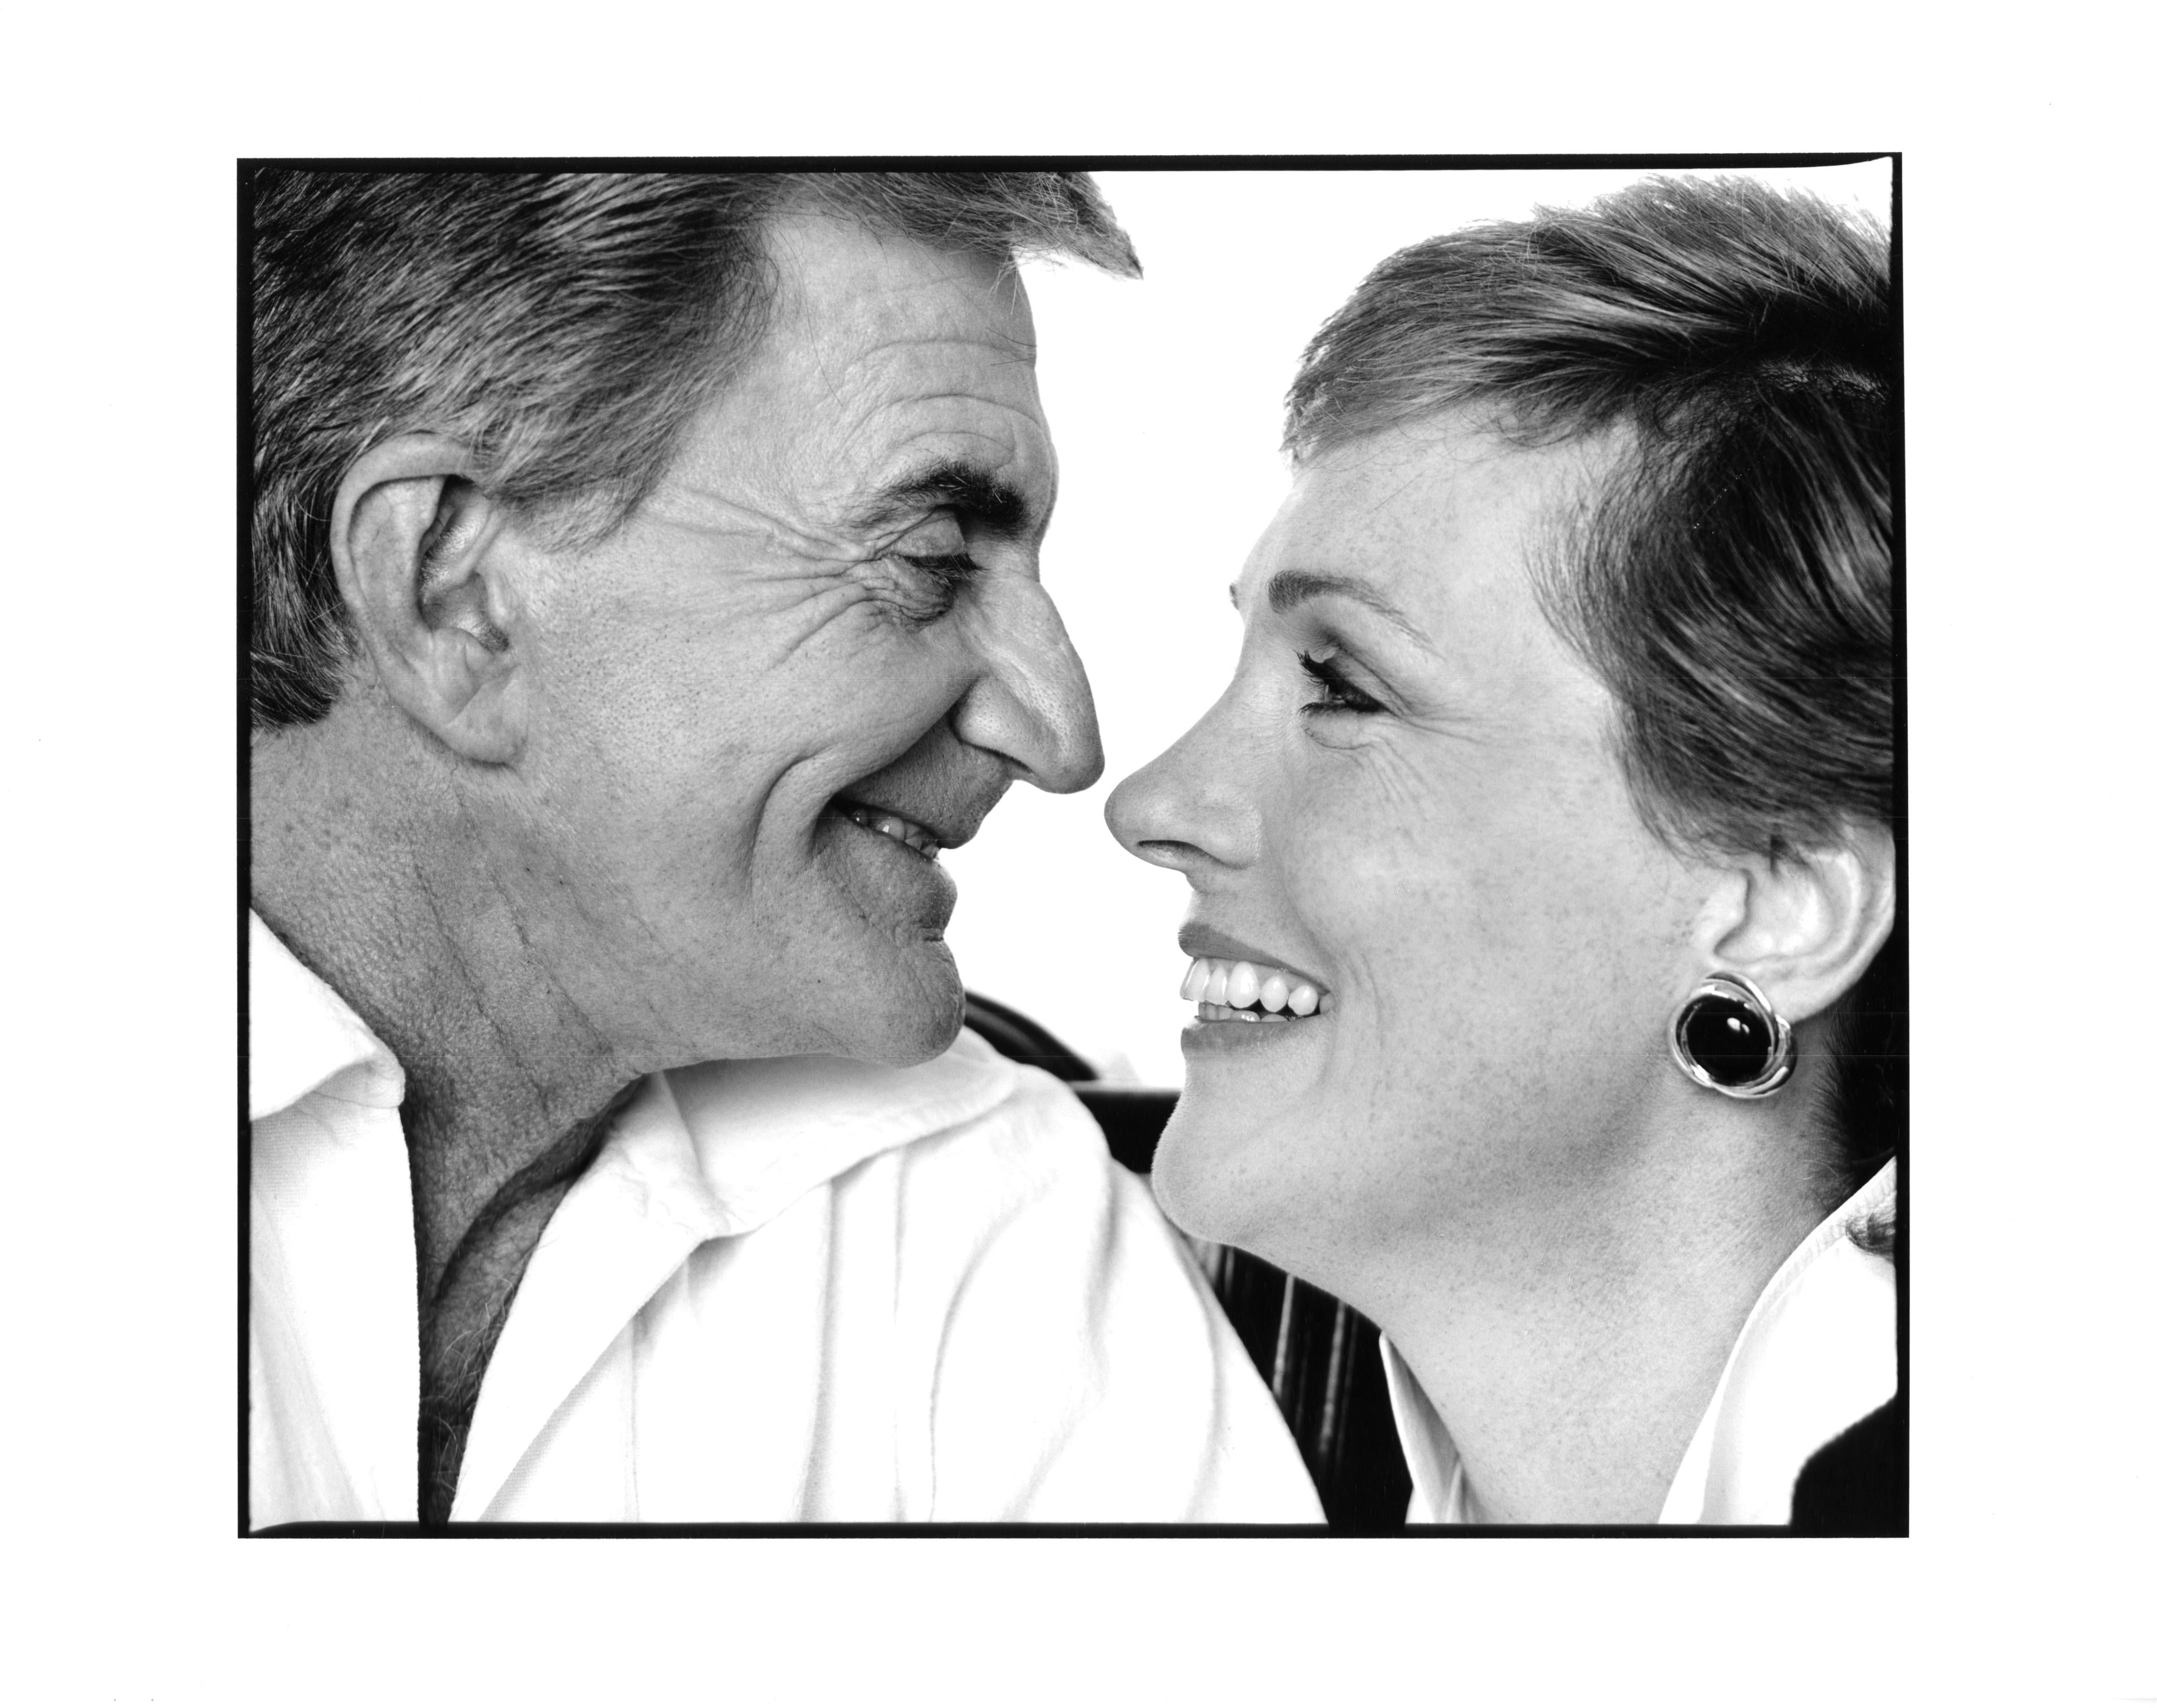 Jack Mitchell Portrait Photograph - Husband & Wife Filmmaker Blake Edwards & Actress Julie Andrews, double portrait